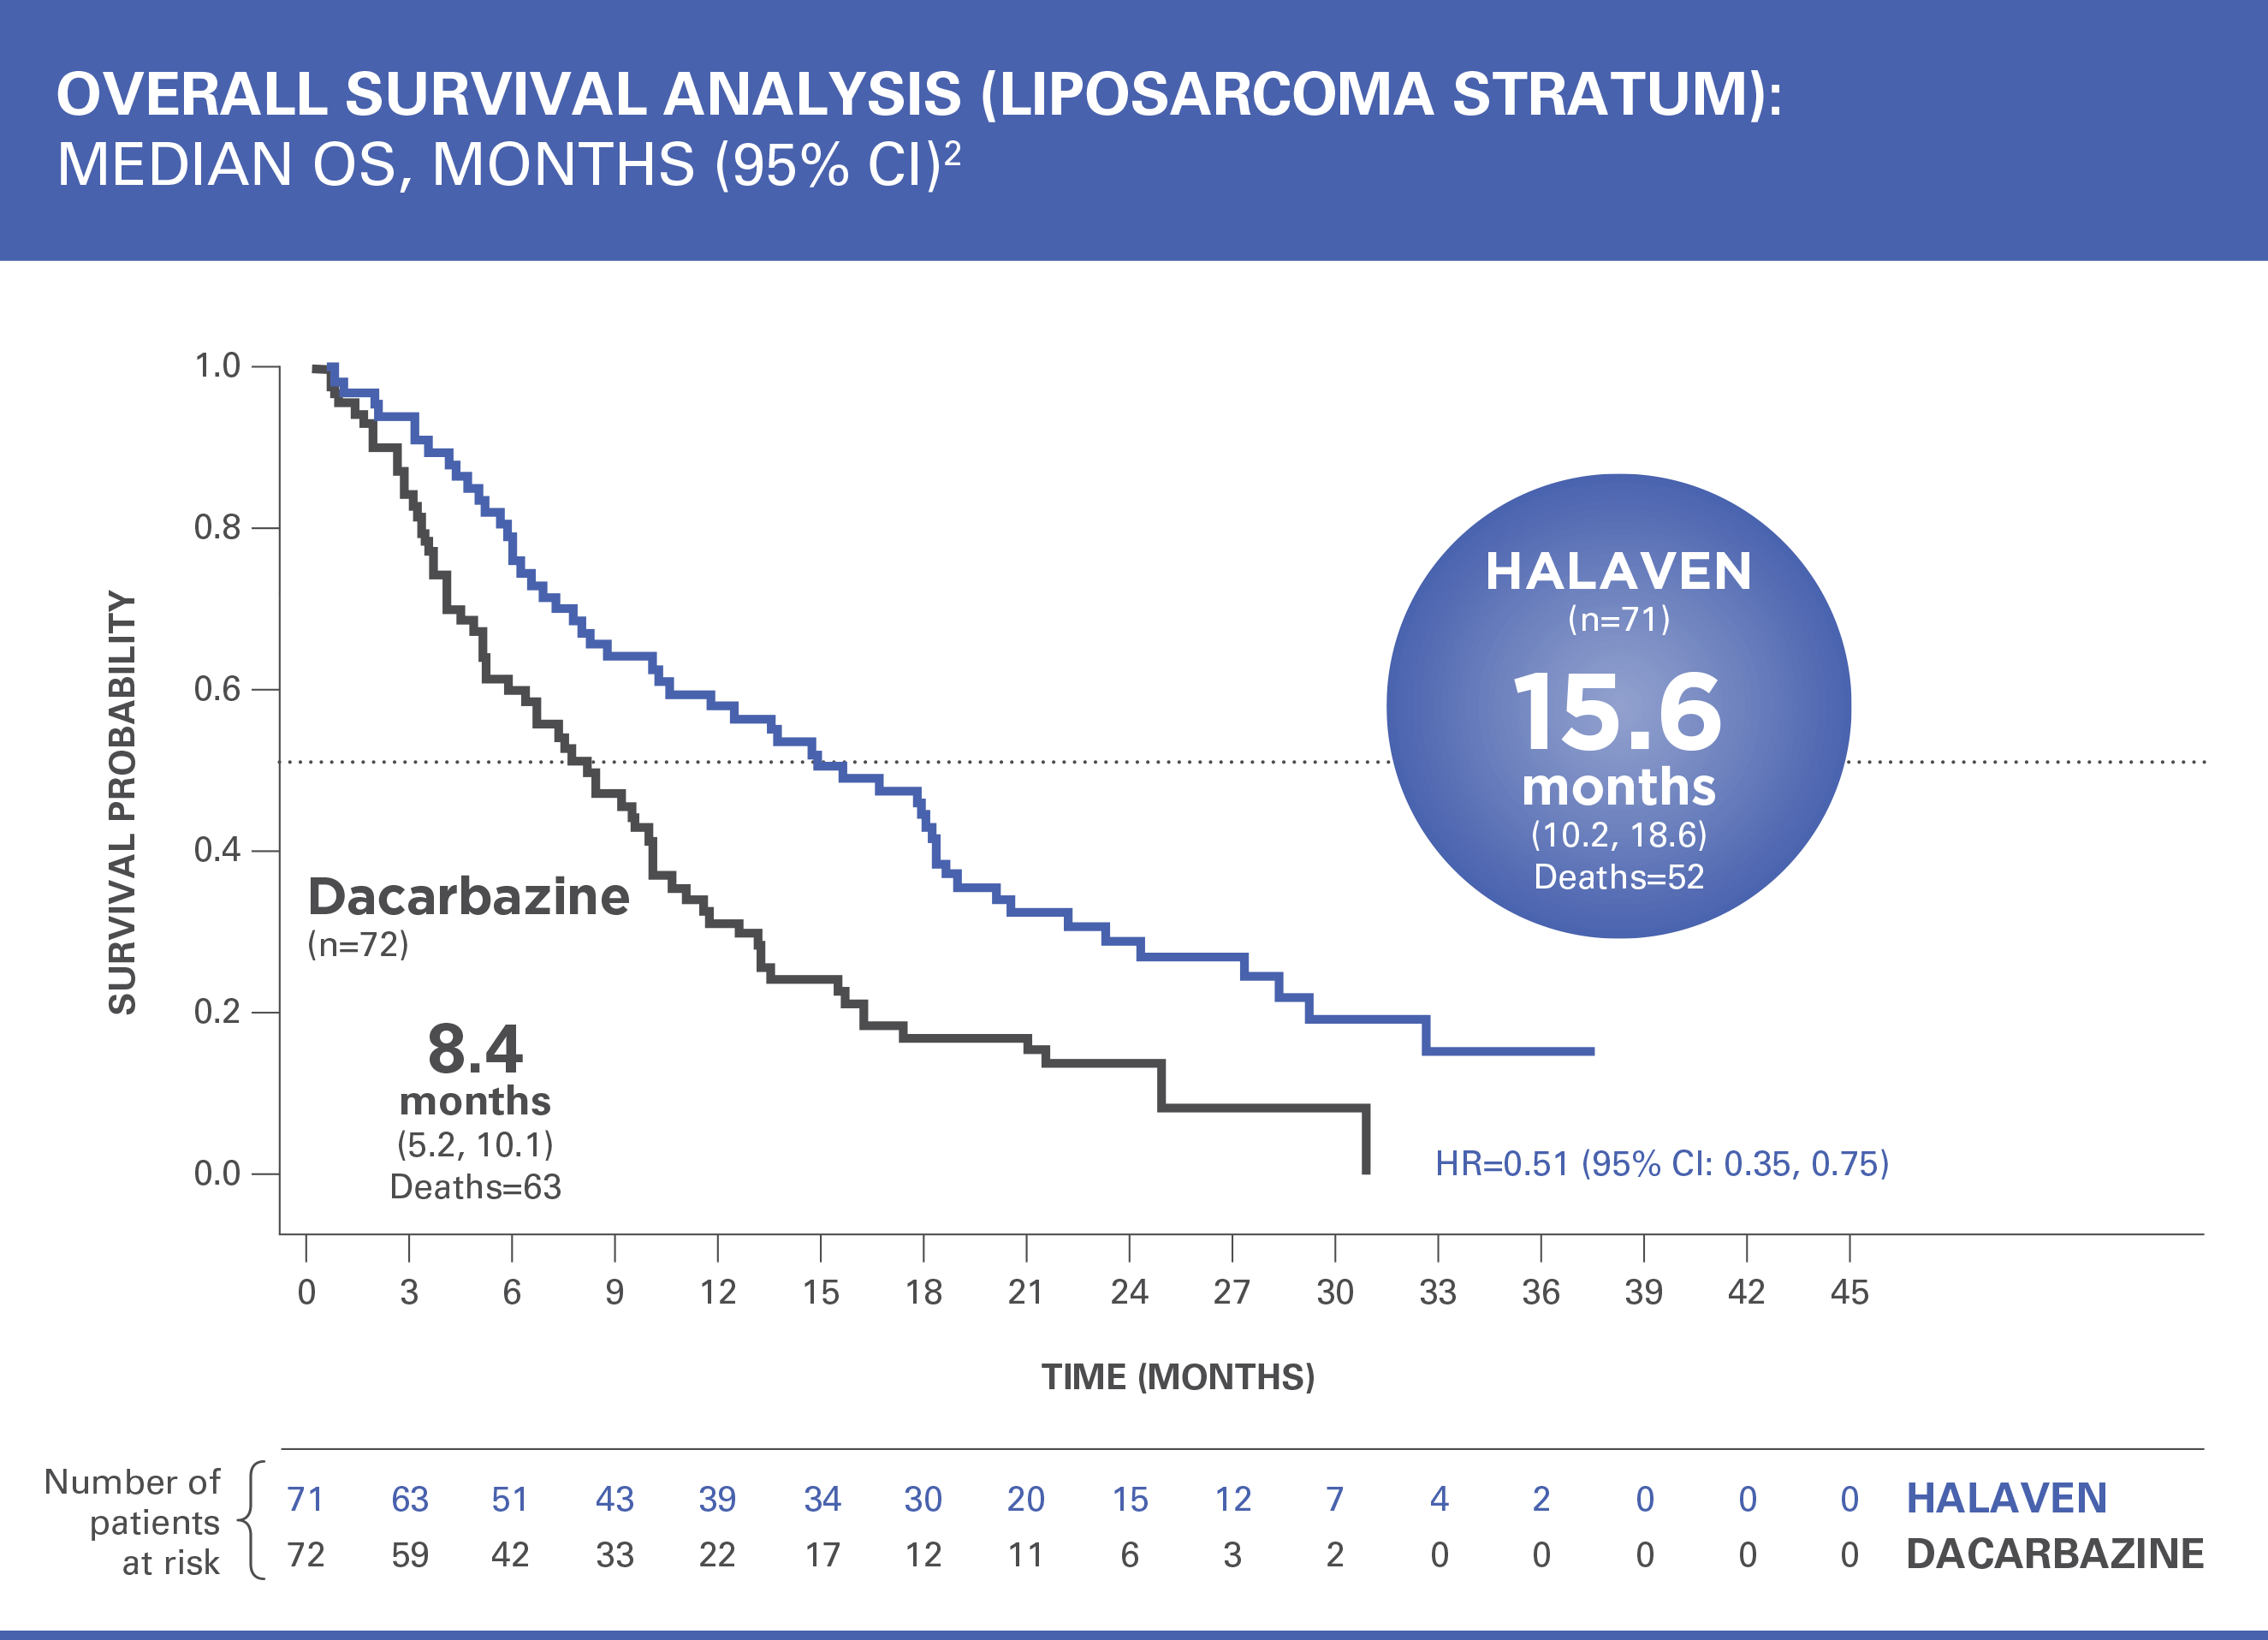 Overall survival analysis for liposarcoma stratum